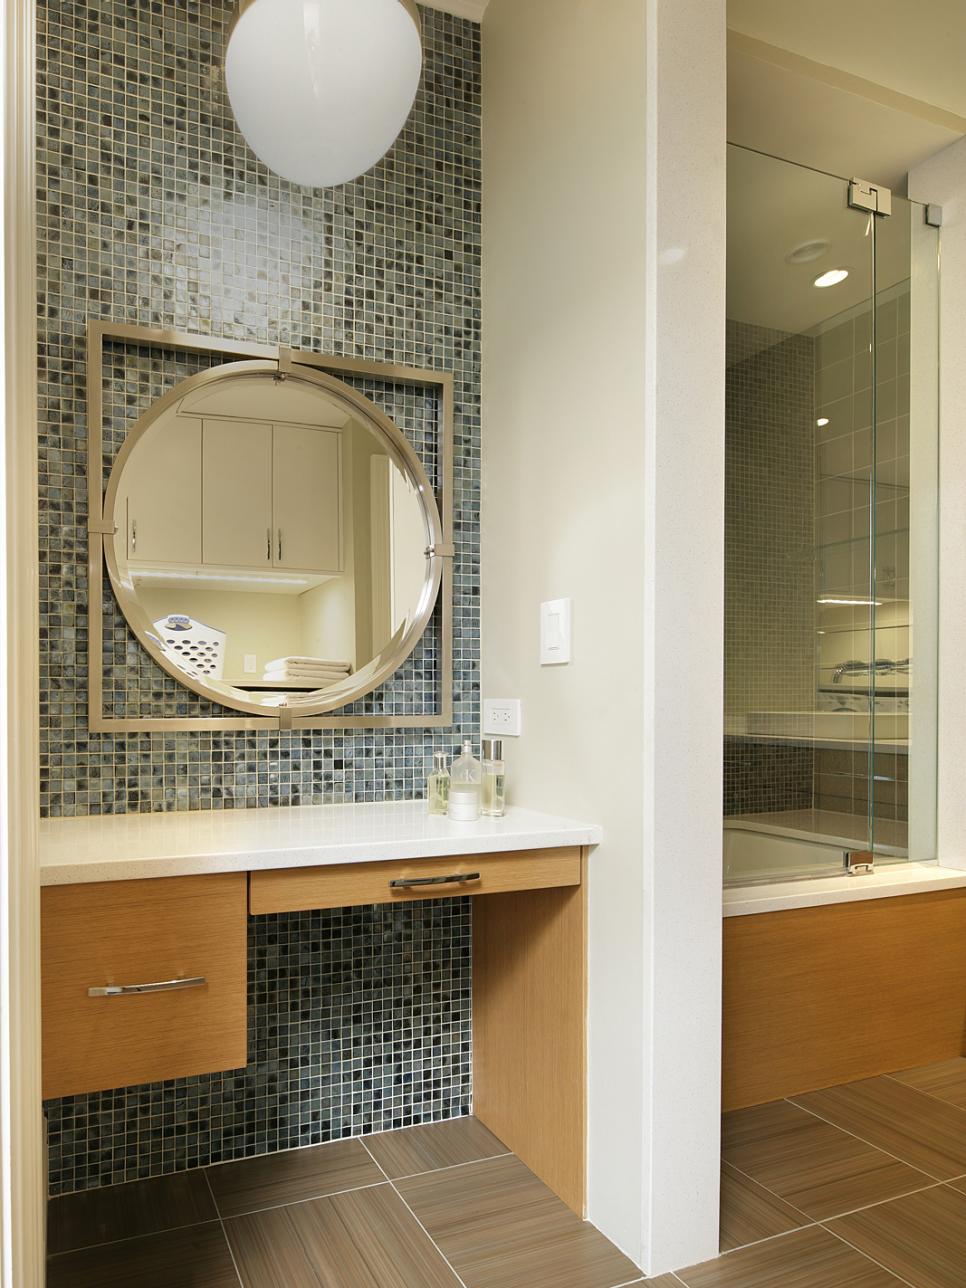 Bathroom Vanity And Mosaic Glass Tile Wall Hgtv